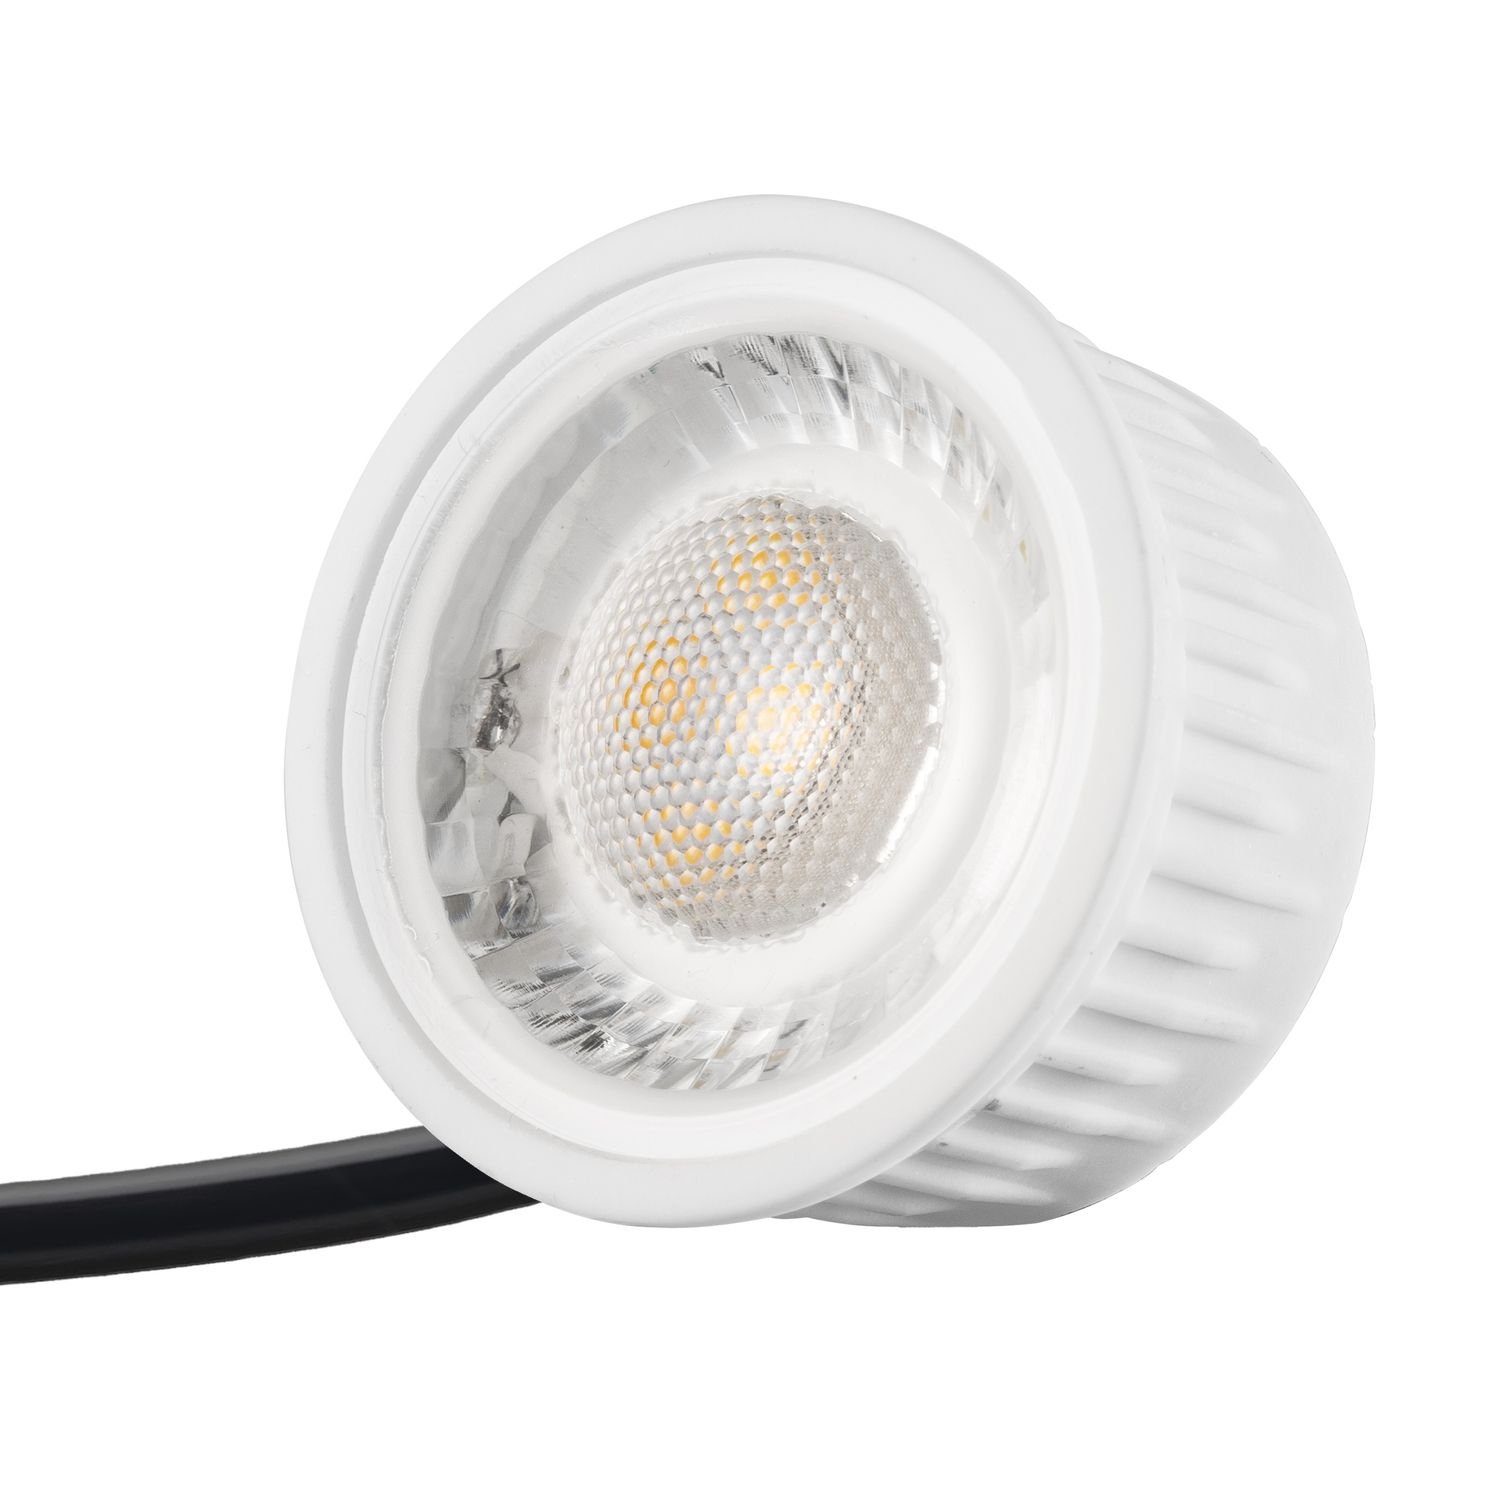 extra Einbaustrahler Einbaustrahler in 10er LEDANDO Set mit weiß LED 5W matt Leuchtmitt flach LED